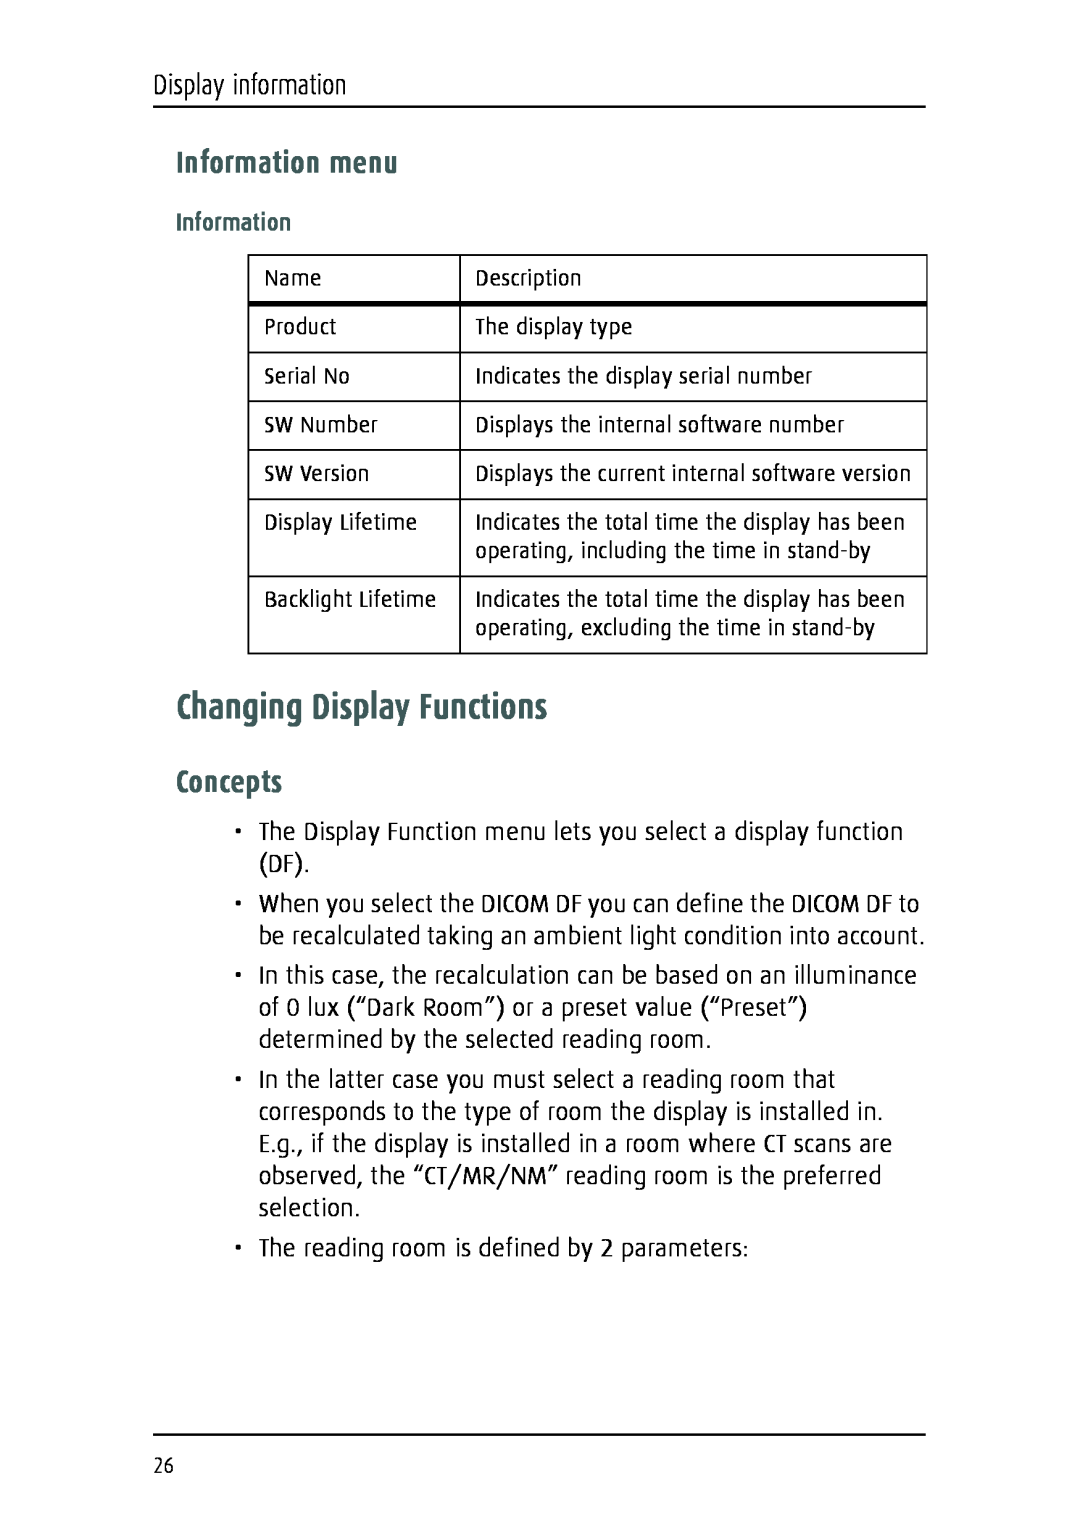 Barco Fusion 4MP manual Changing Display Functions, Information menu, Concepts, Display information 